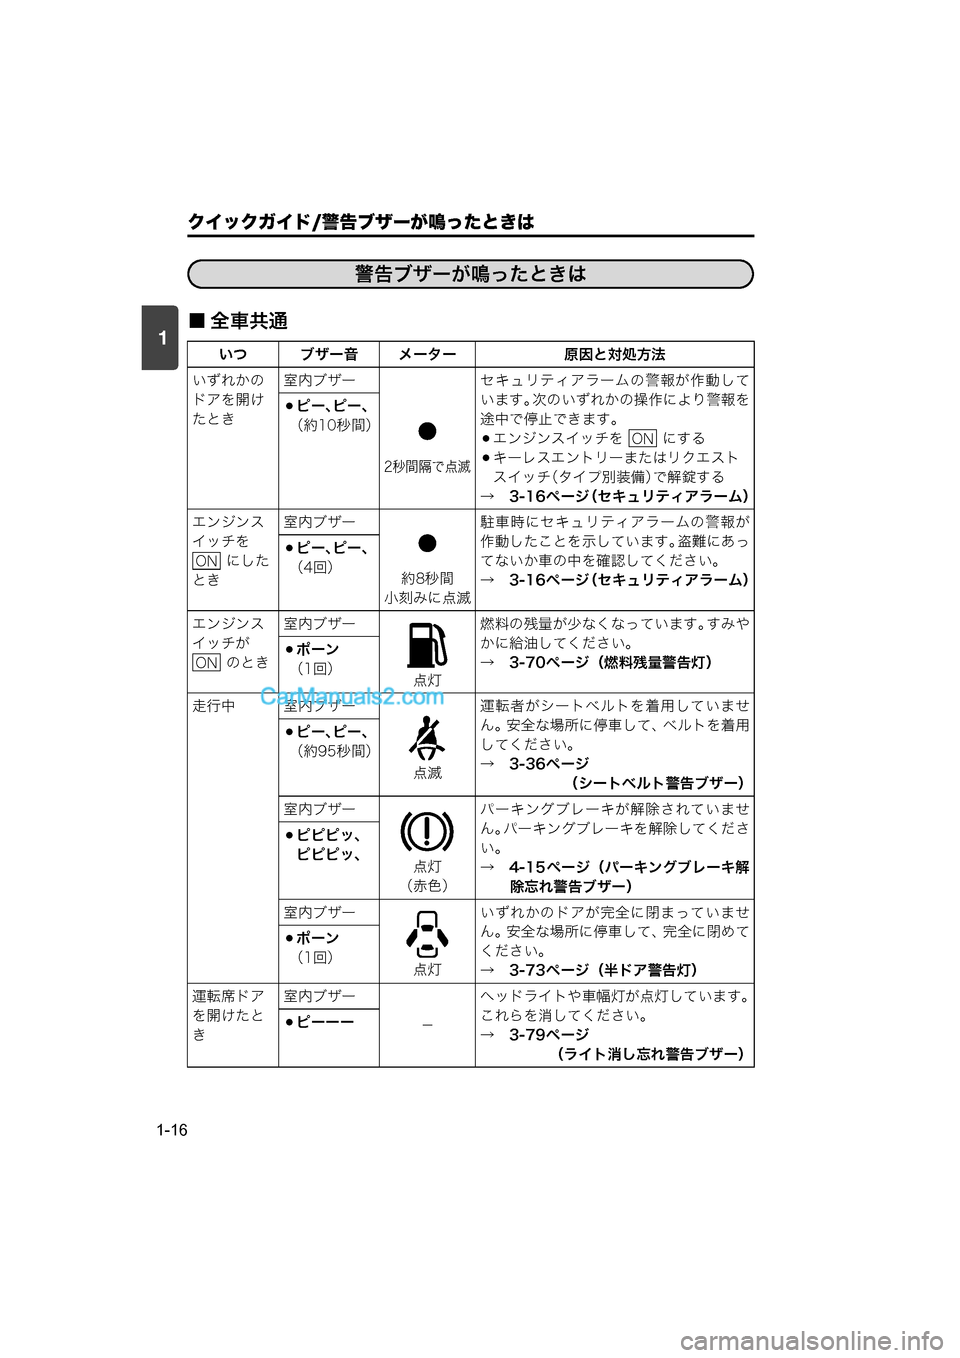 MAZDA MODEL CARROL 2015  取扱説明書 (キャロル) (in Japanese) 1
クイックガイド/警告ブザーが鳴ったときは
1-16
■ 全車共通
いつ ブザー音 メーター原因と対処方法
いずれかの
ドアを開け
たとき 室内ブザー
2秒�